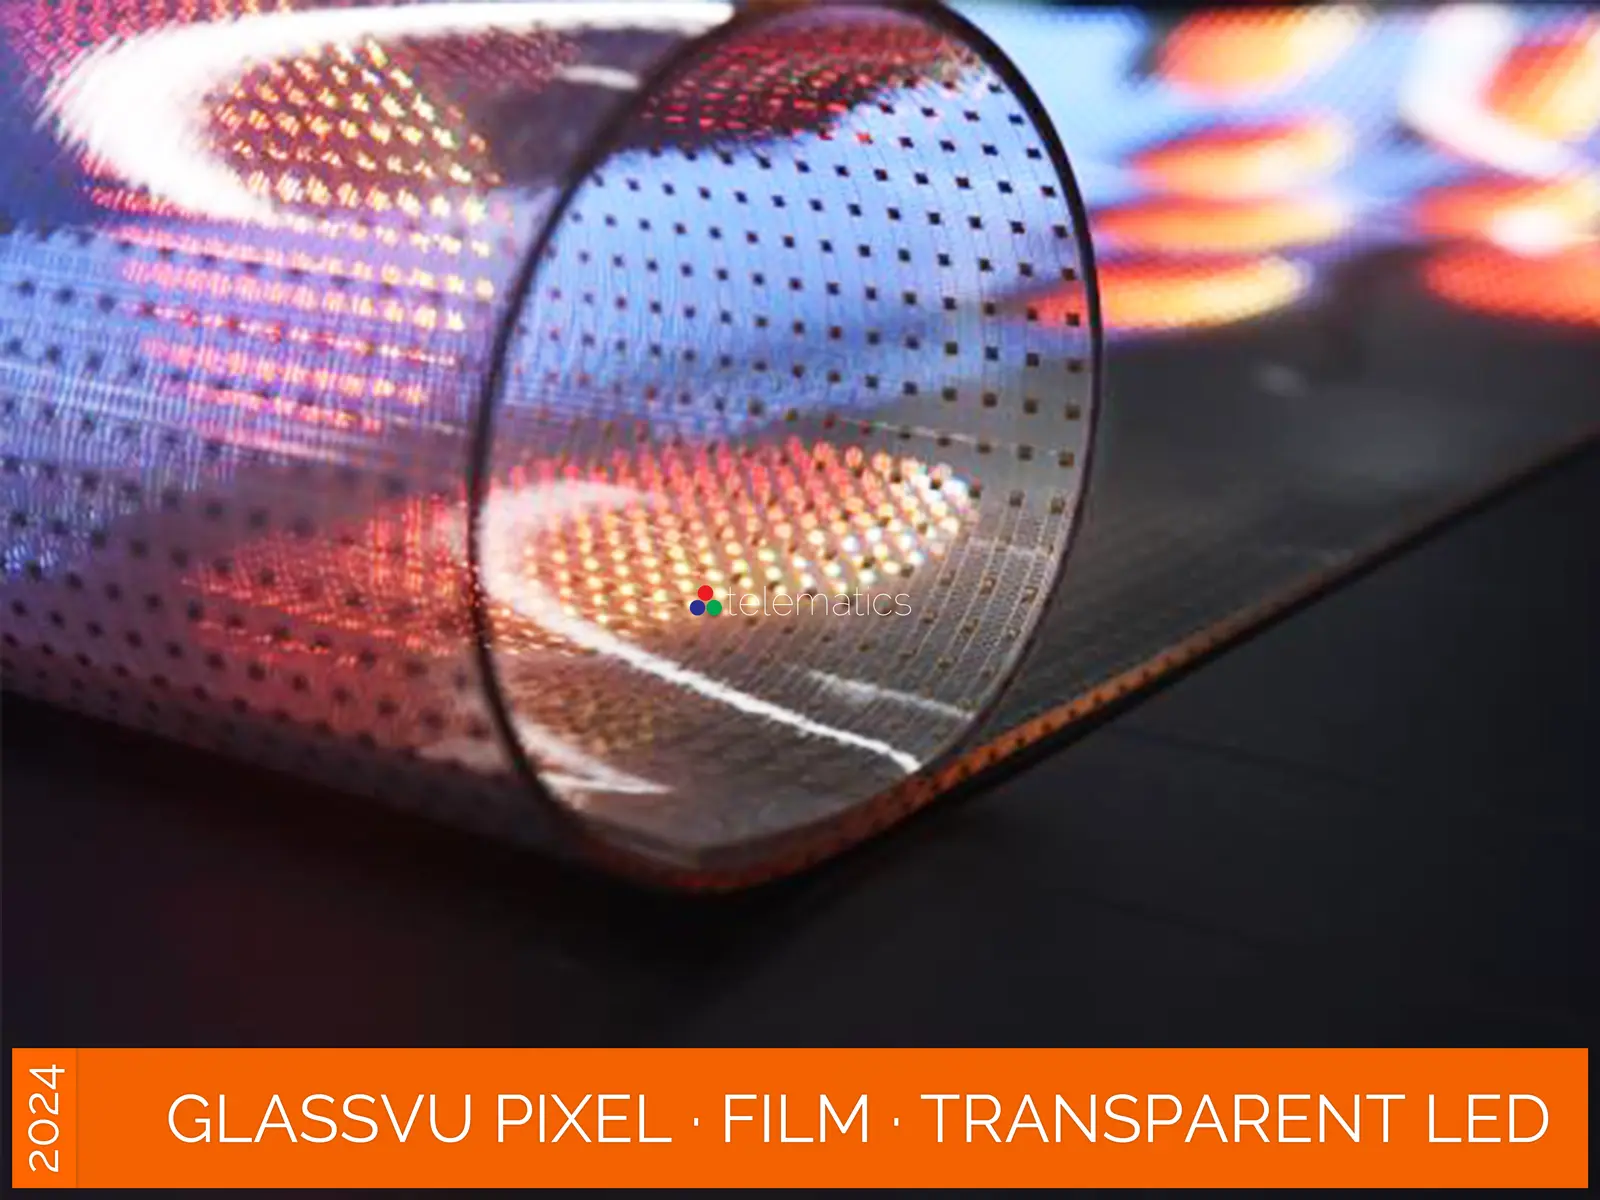 glassvu-pixel-transparent-led-display-mesh-film-novastar-vmp-vnnox-telematics-canada-usa-review-price-cost-film-01.webp